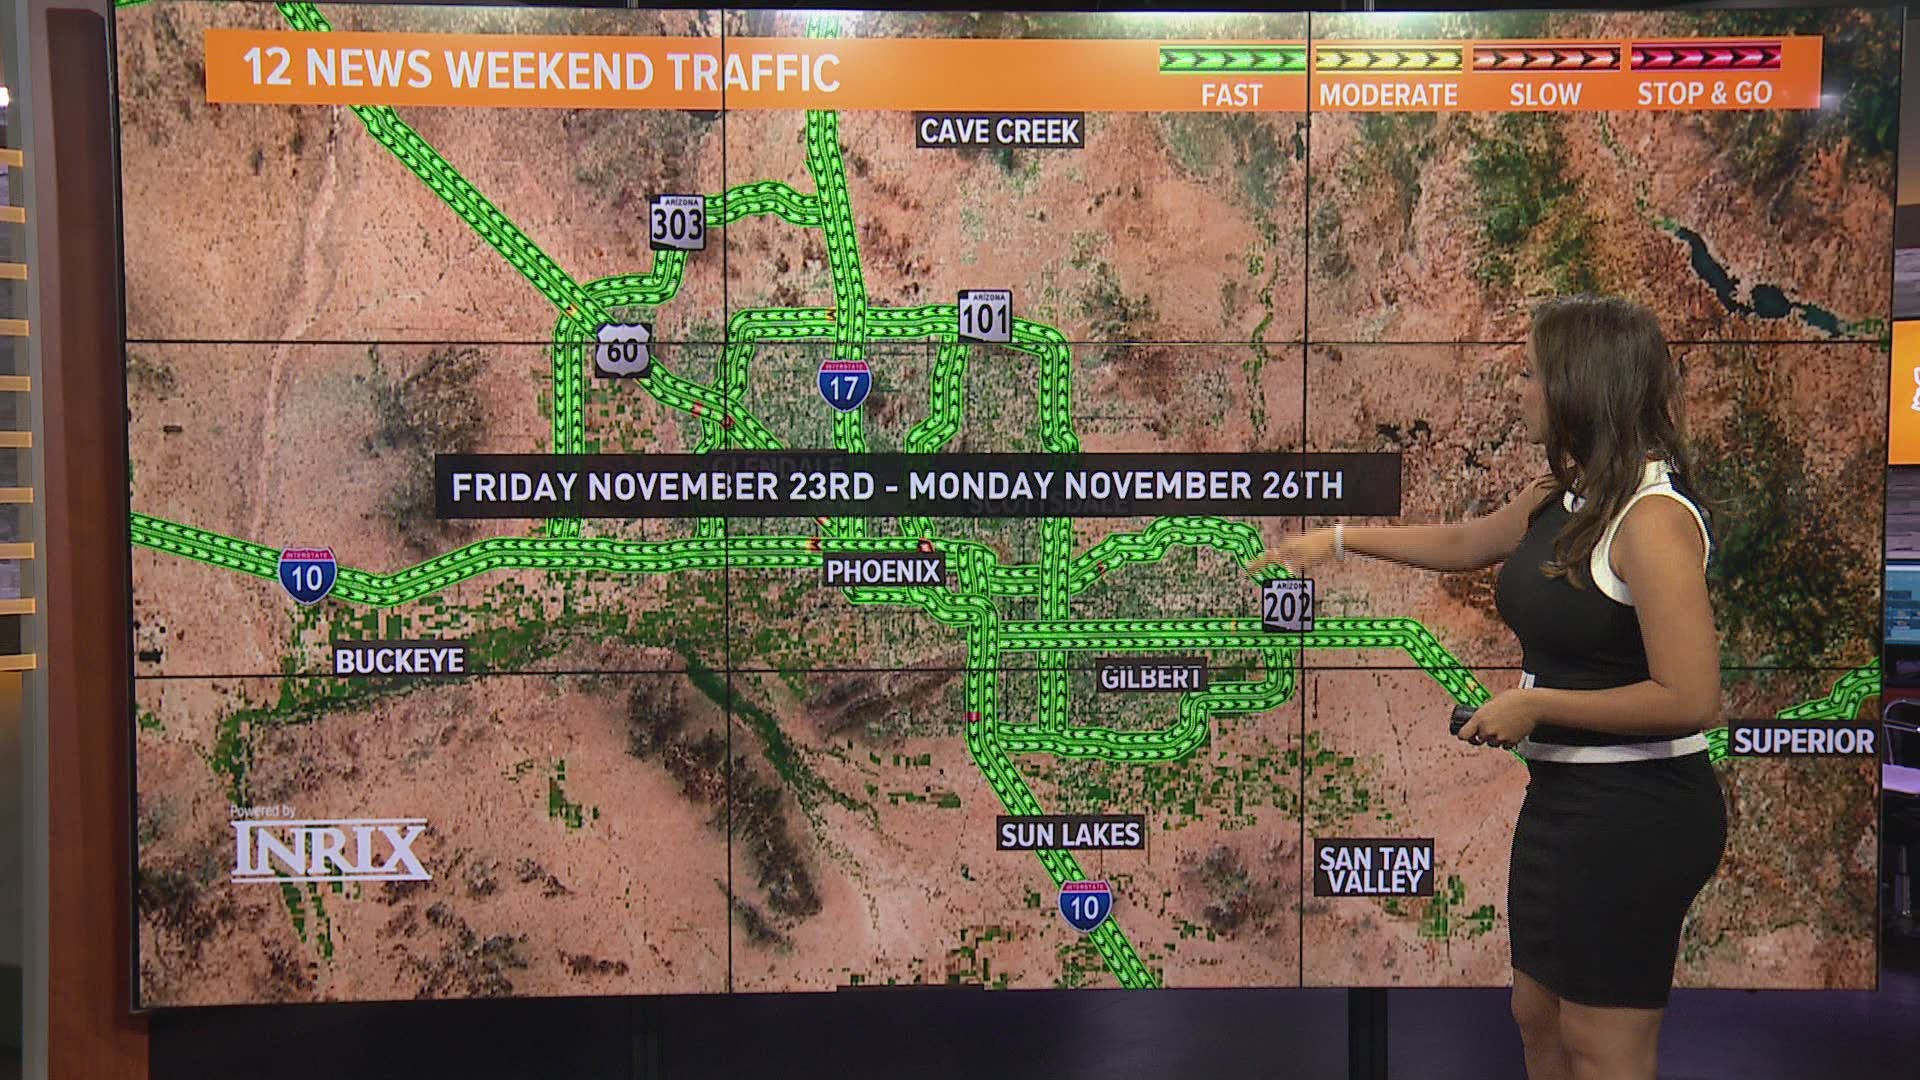 Here's the weekend traffic outlook for November 23 - November  26.